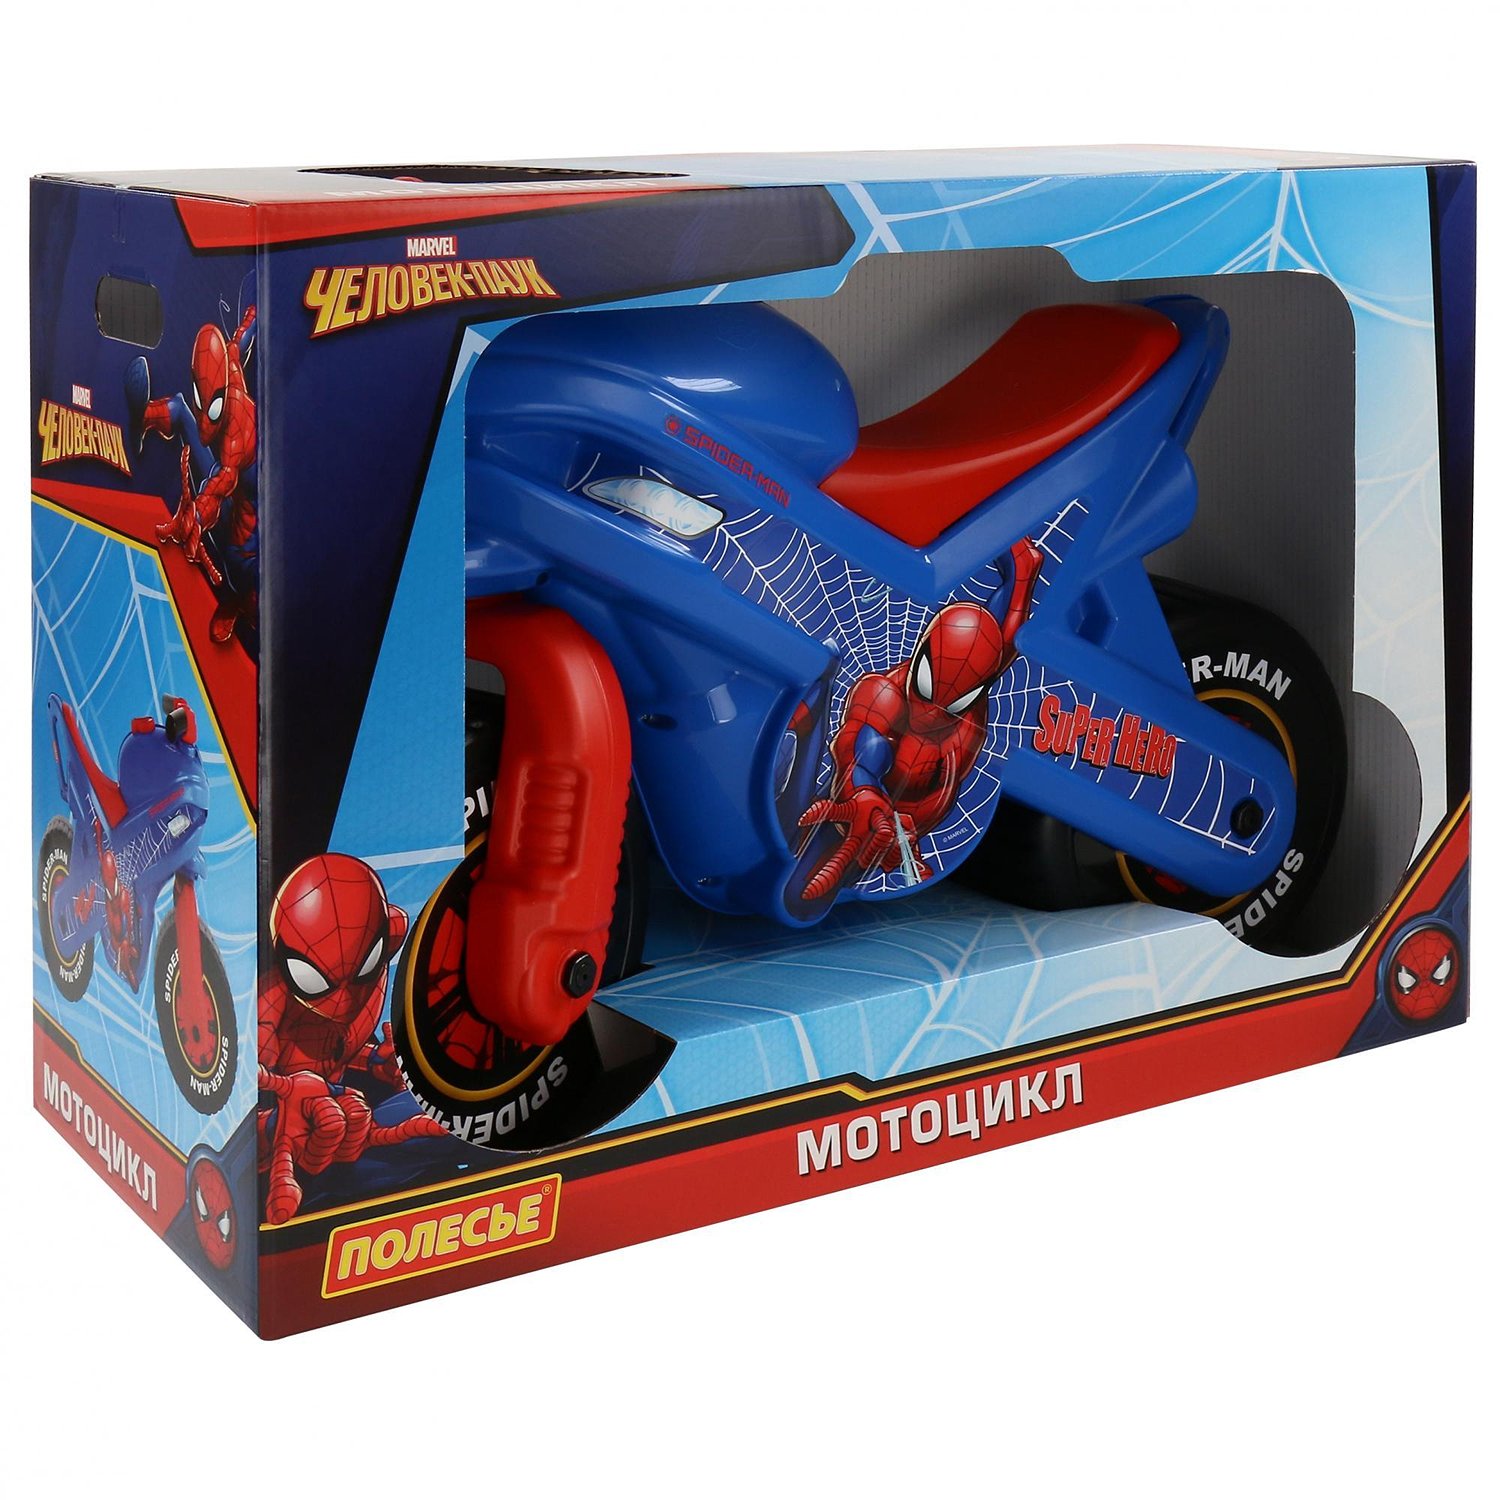 Мотоцикл Marvel - Человек-паук, в коробке  